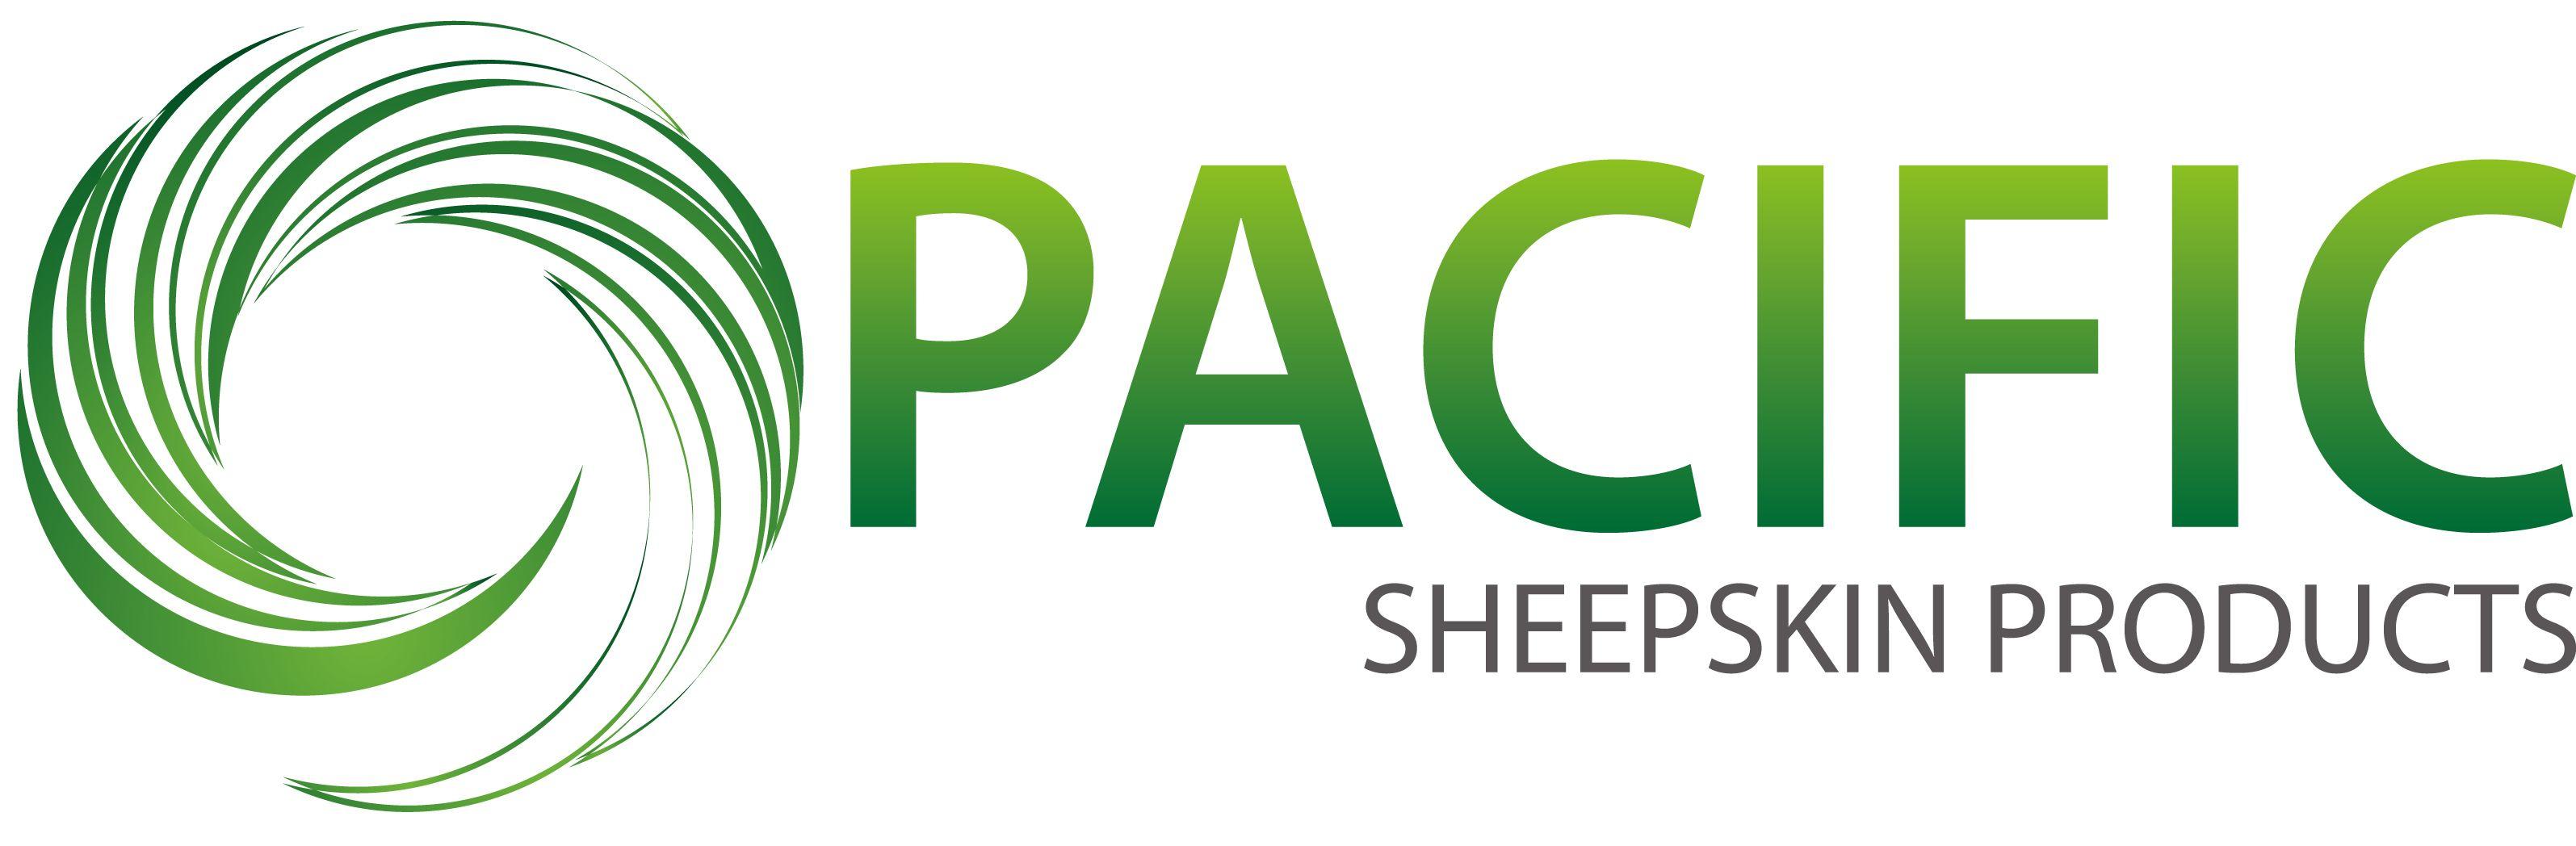 Pacific Logo - File:Pacific logo.jpg - Wikimedia Commons